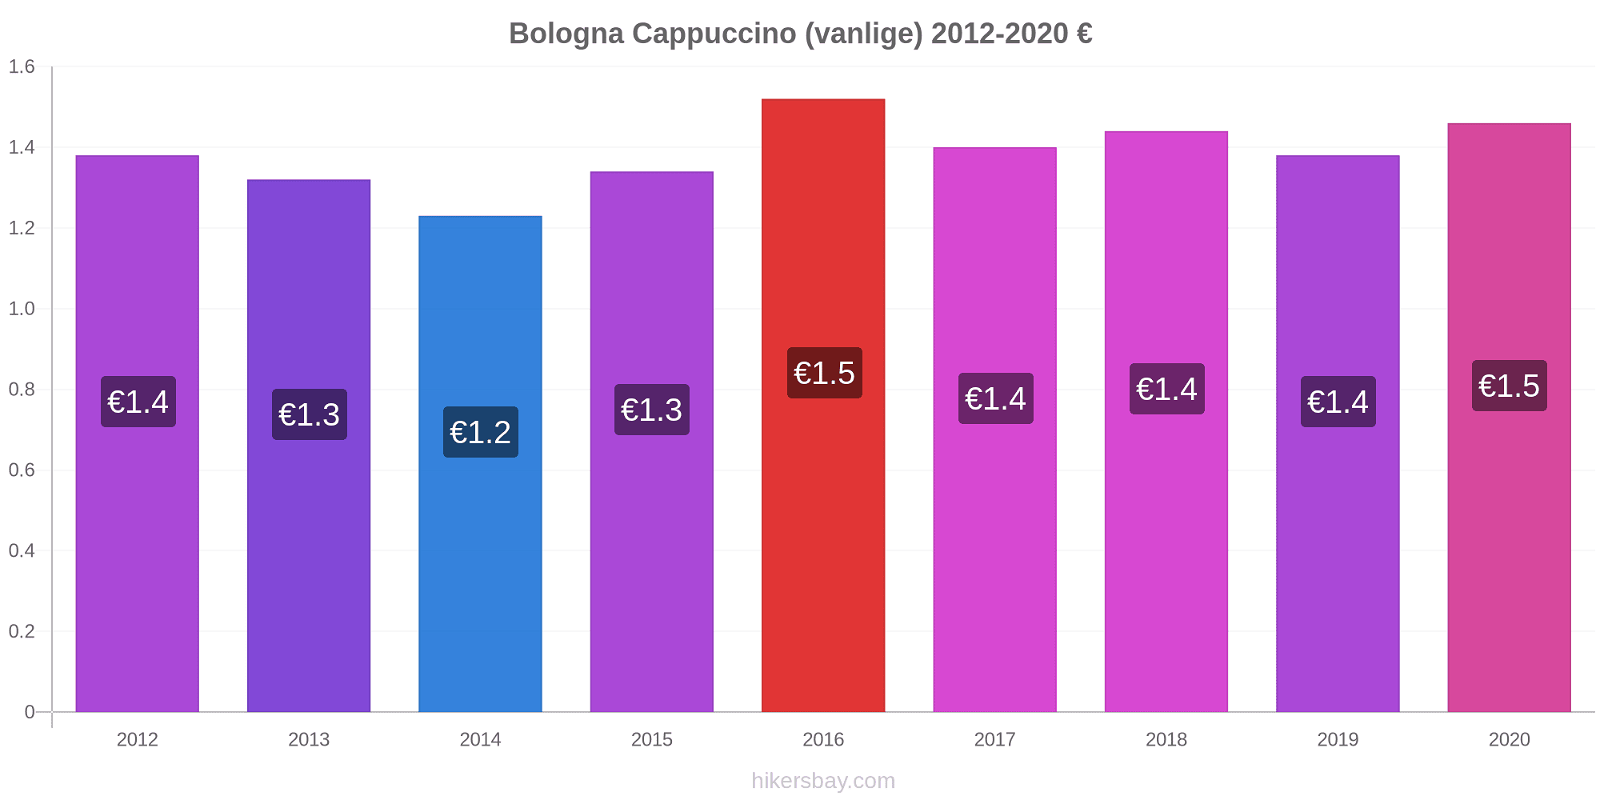 Bologna prisendringer Cappuccino (vanlige) hikersbay.com